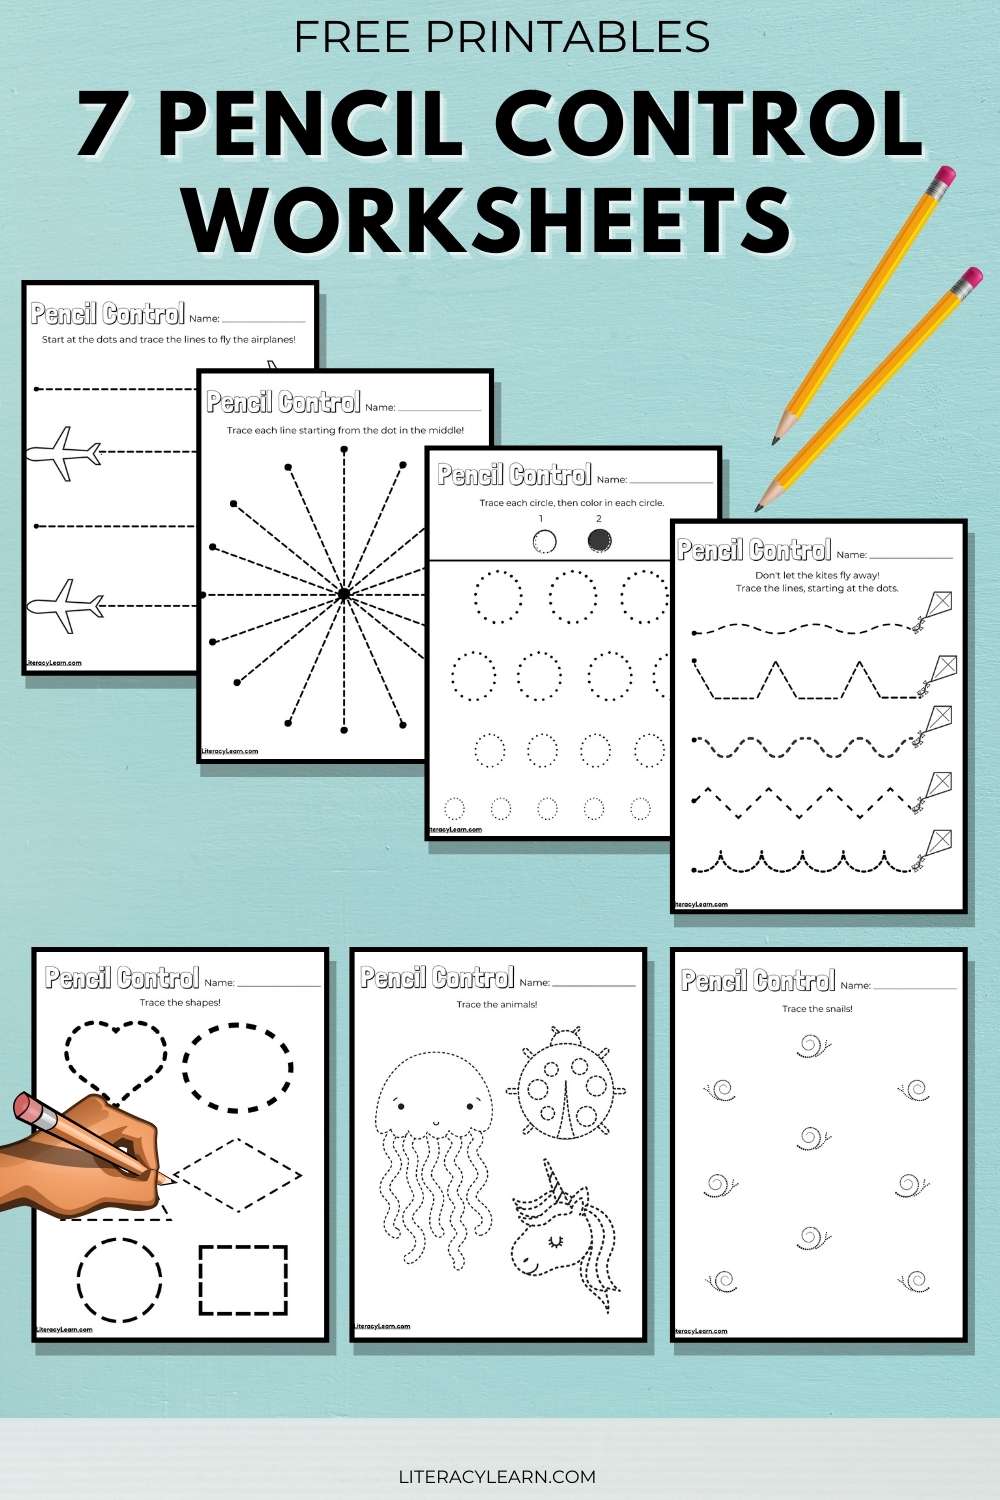 Nursery Pencil Control Worksheets - Free Printable - The Mum Educates